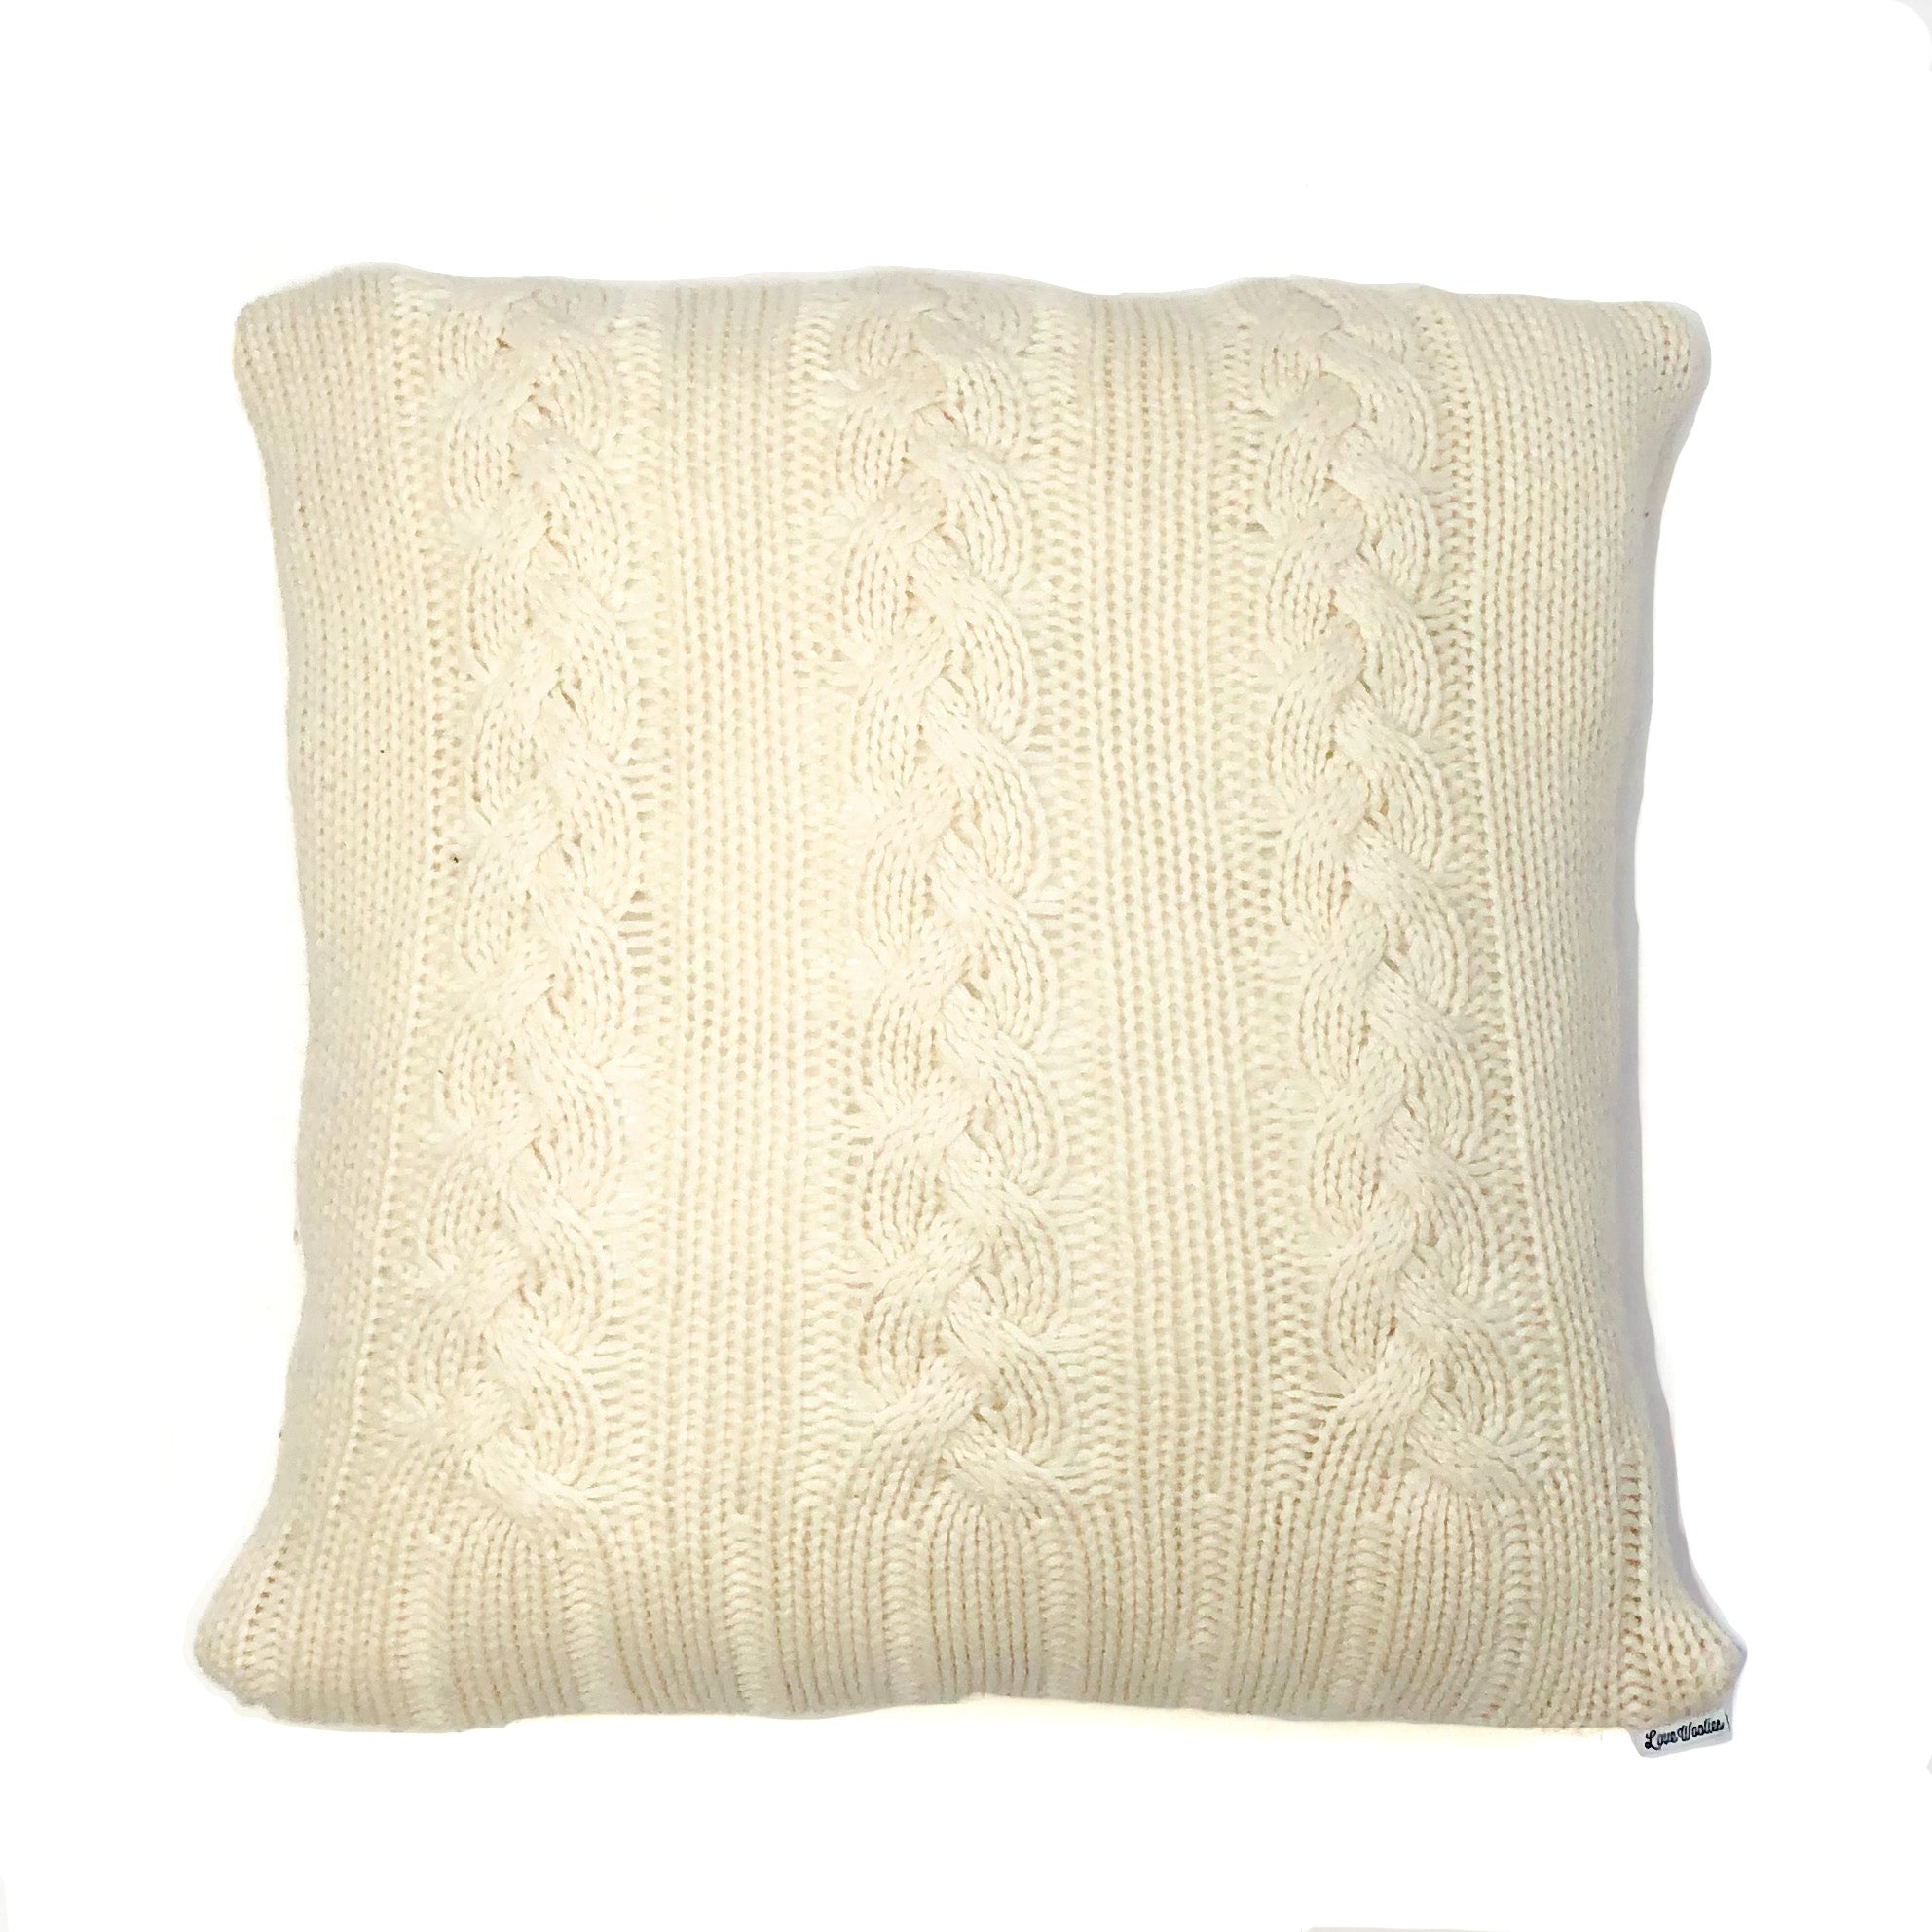 14 x 14 Cream Wool Pillow Cover - Love Woolies